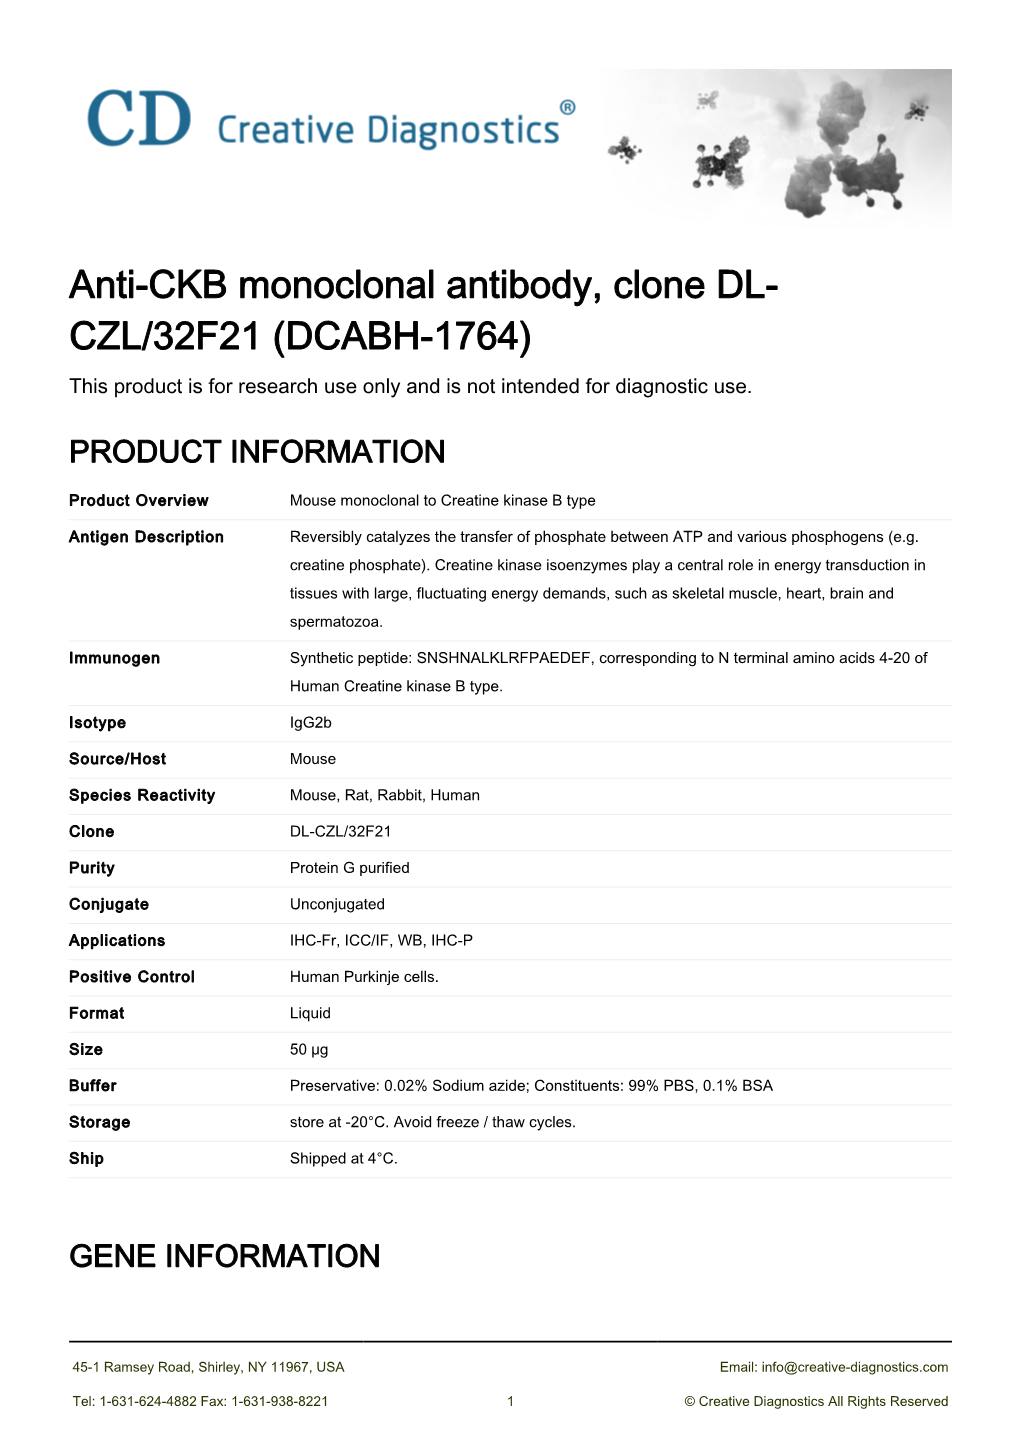 Anti-CKB Monoclonal Antibody, Clone DL-CZL/32F21